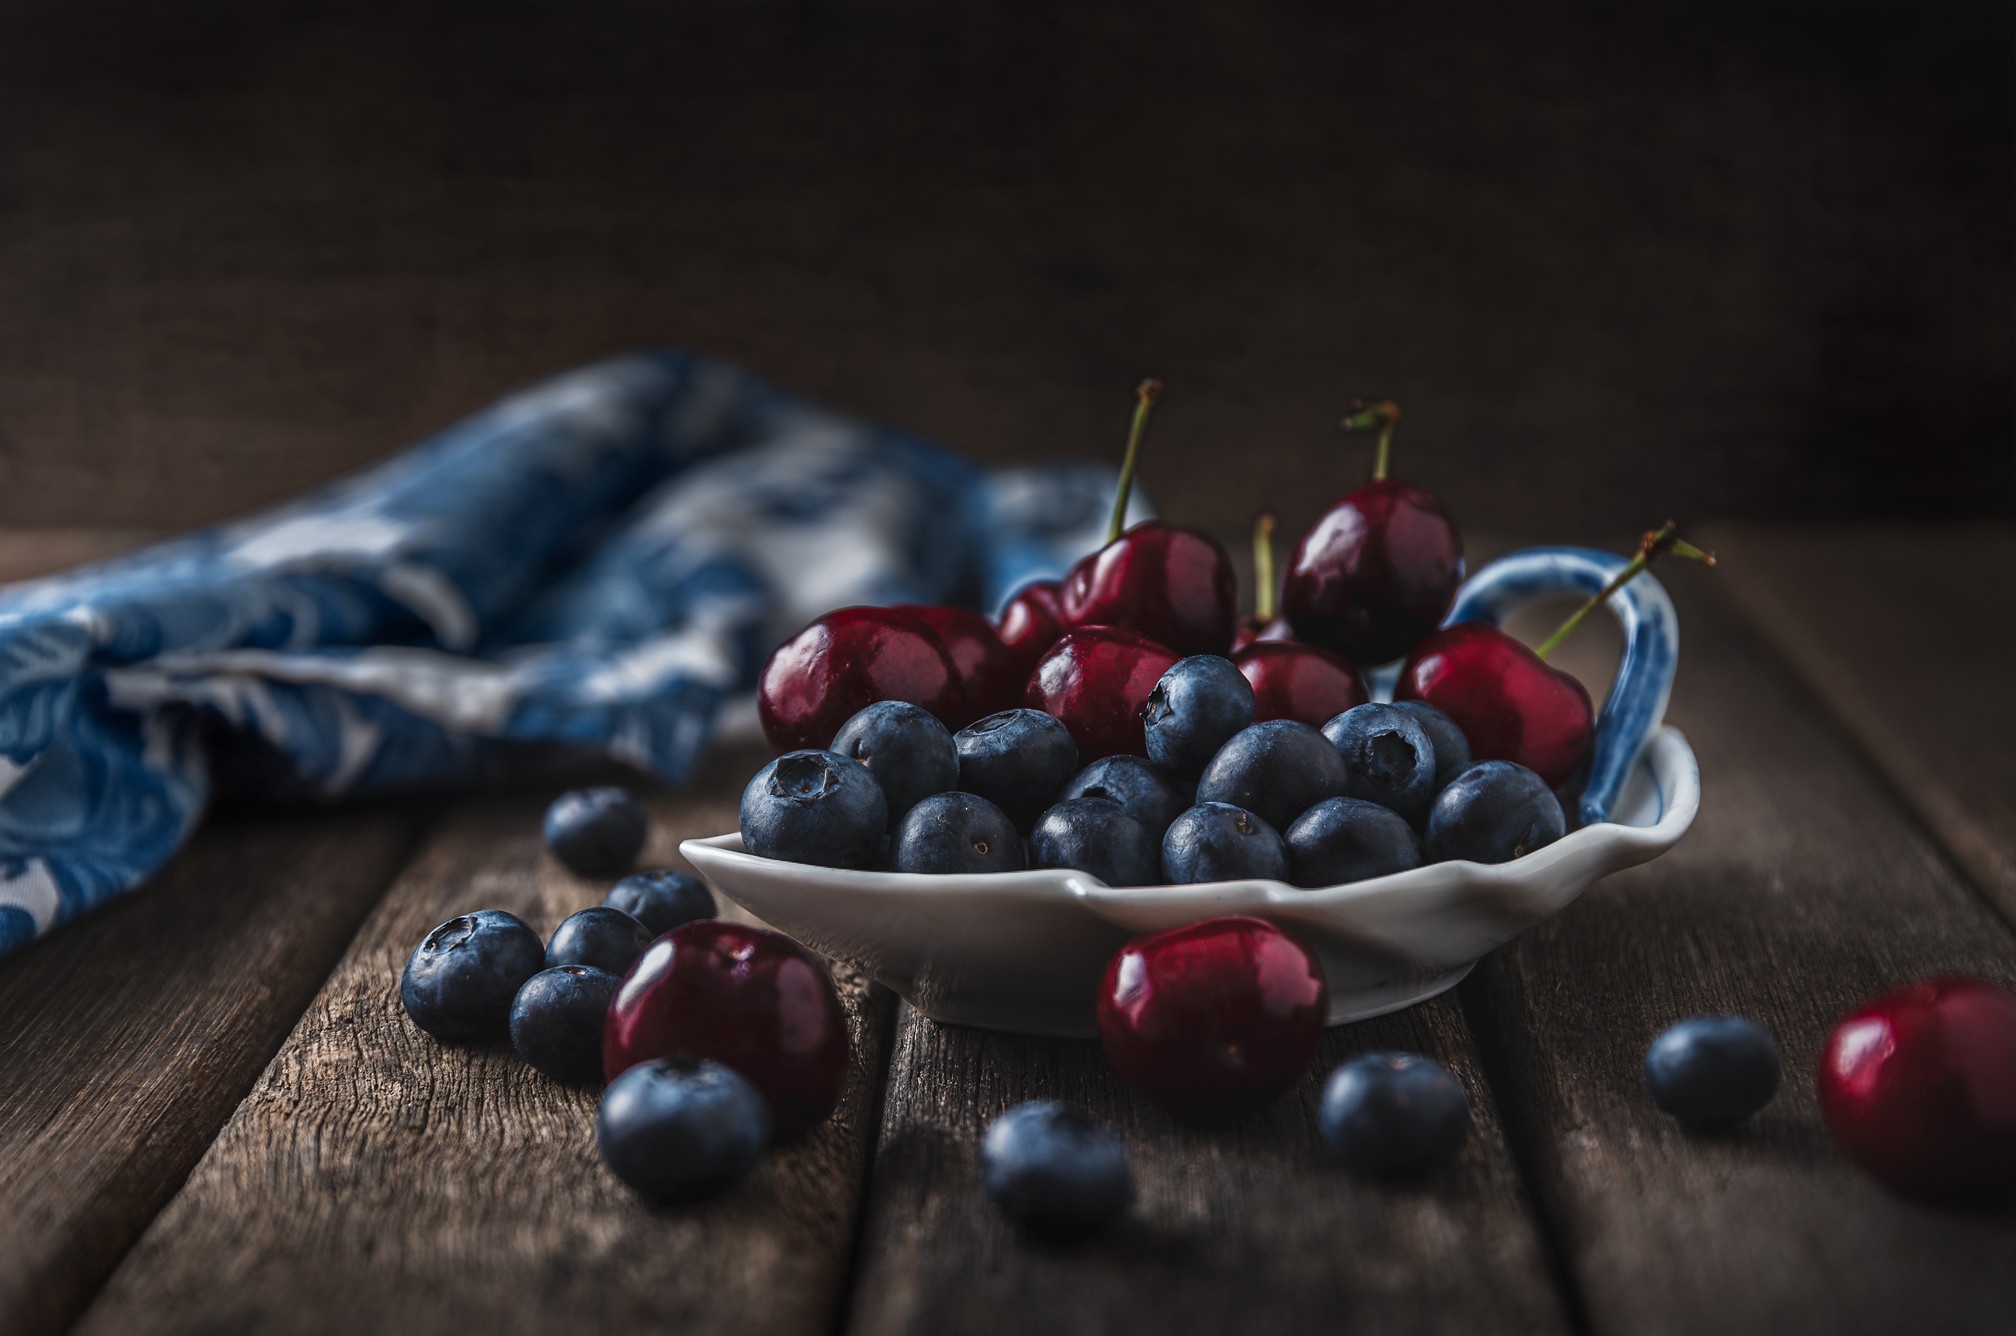 General 2016x1336 food fruit berries cherries still life